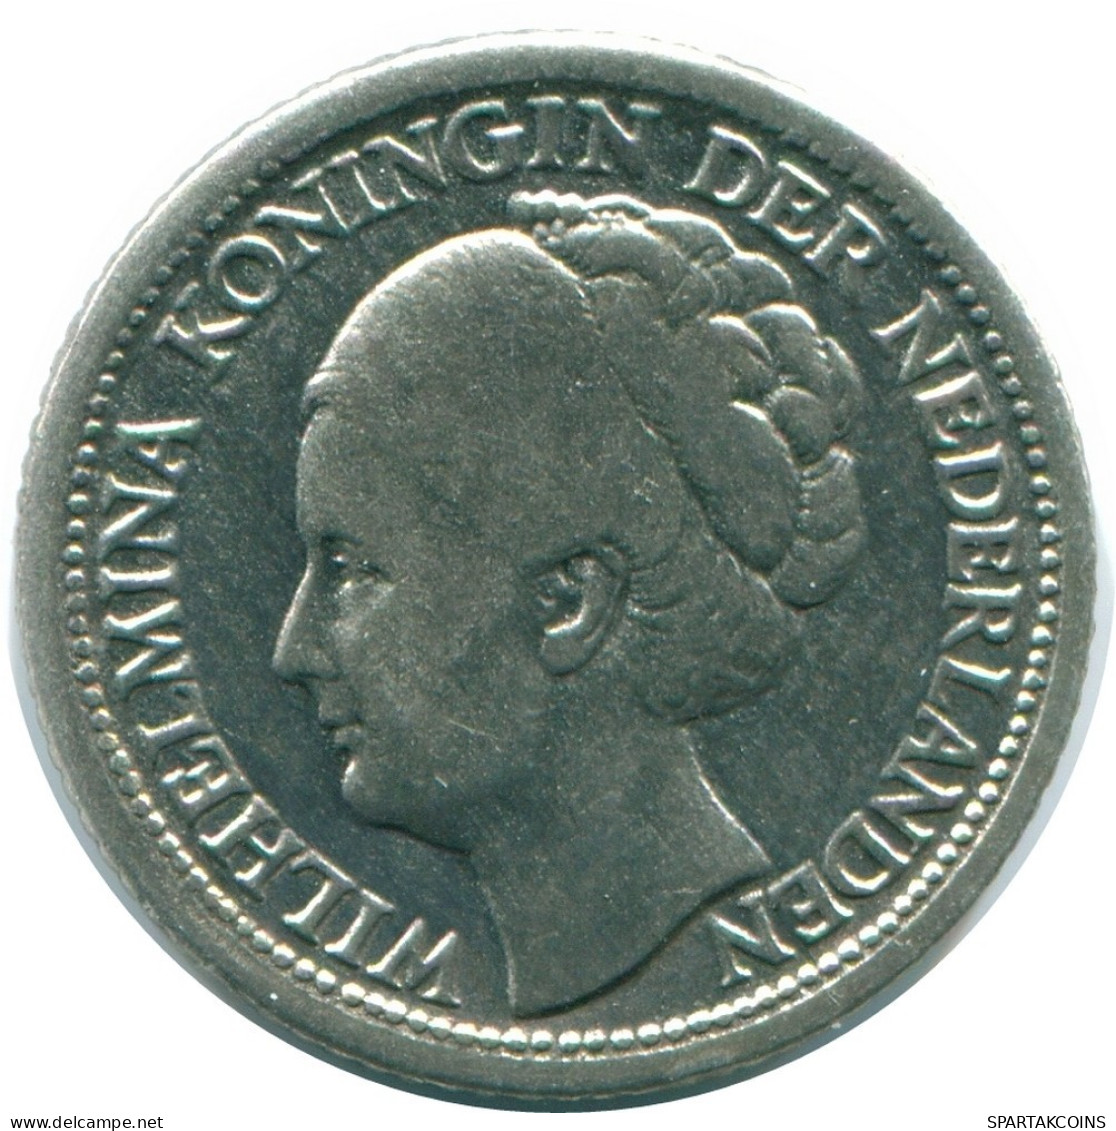 1/4 GULDEN 1944 CURACAO Netherlands SILVER Colonial Coin #NL10686.4.U.A - Curaçao